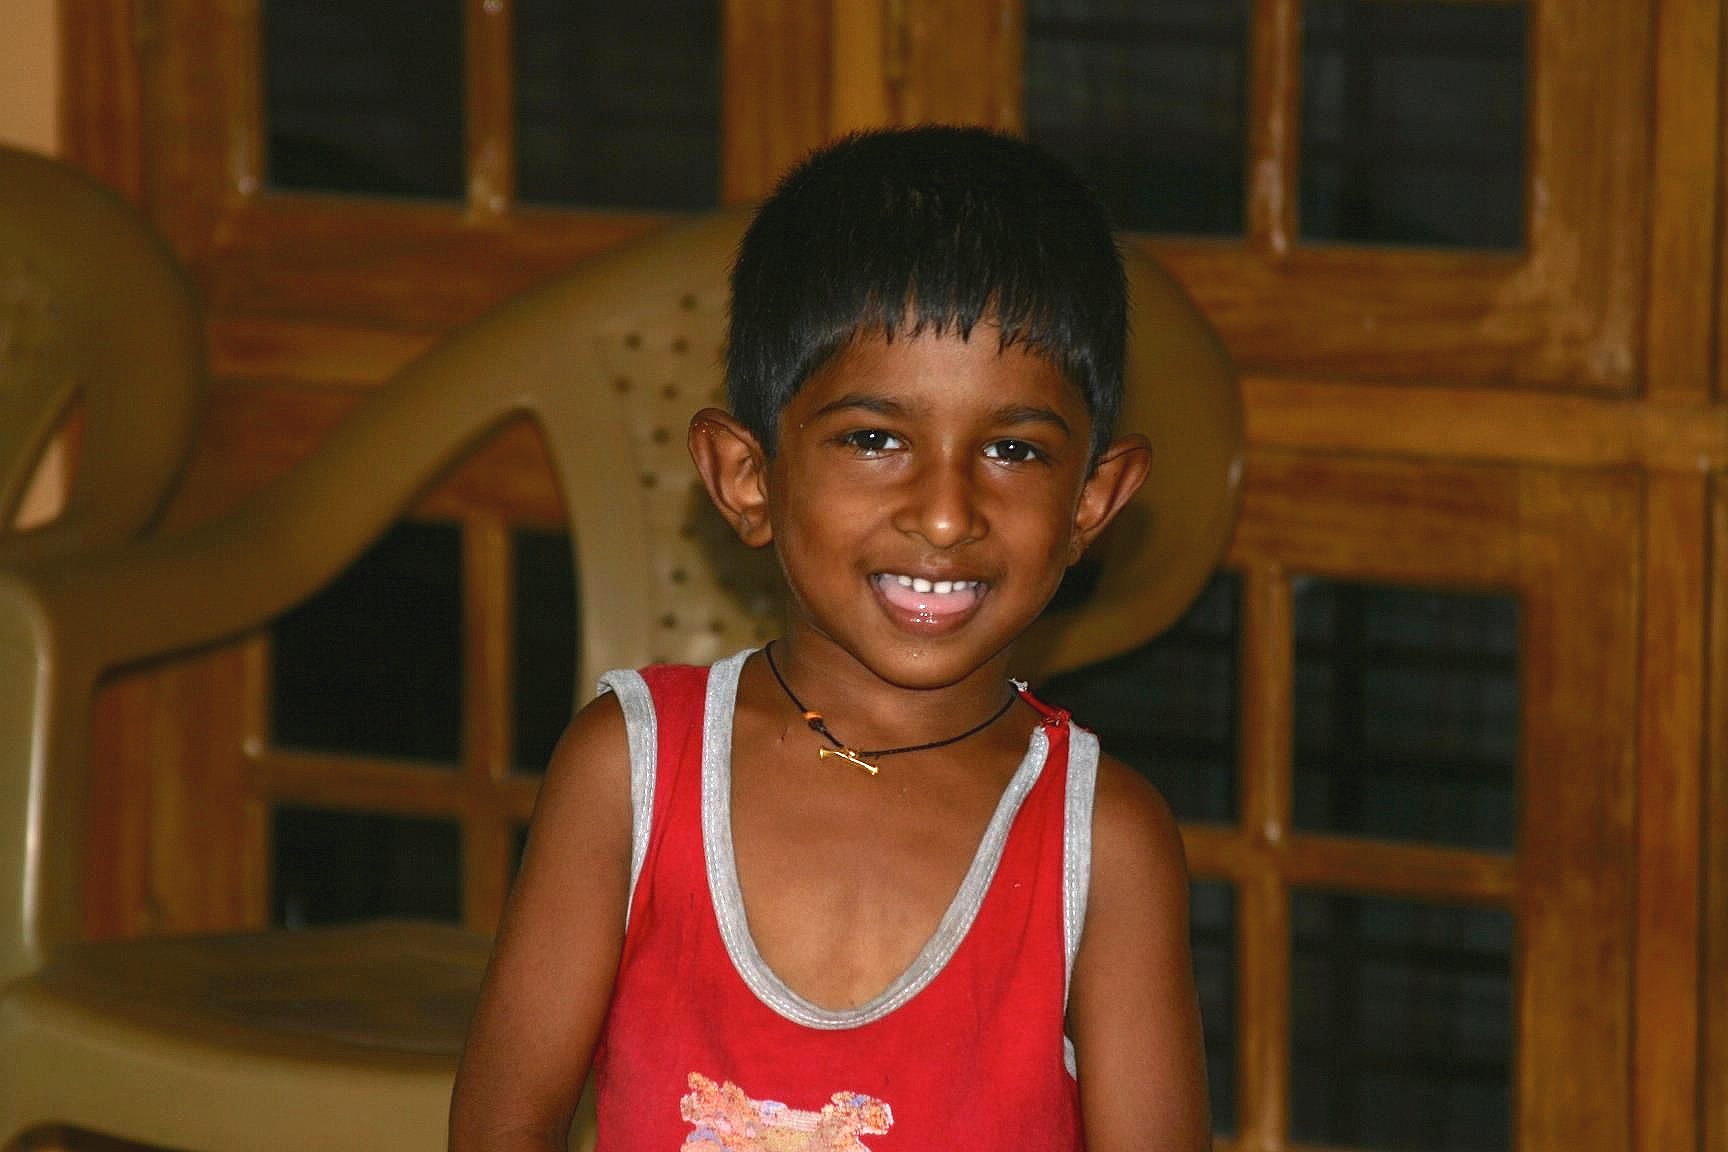 Village boy in Kerala, India